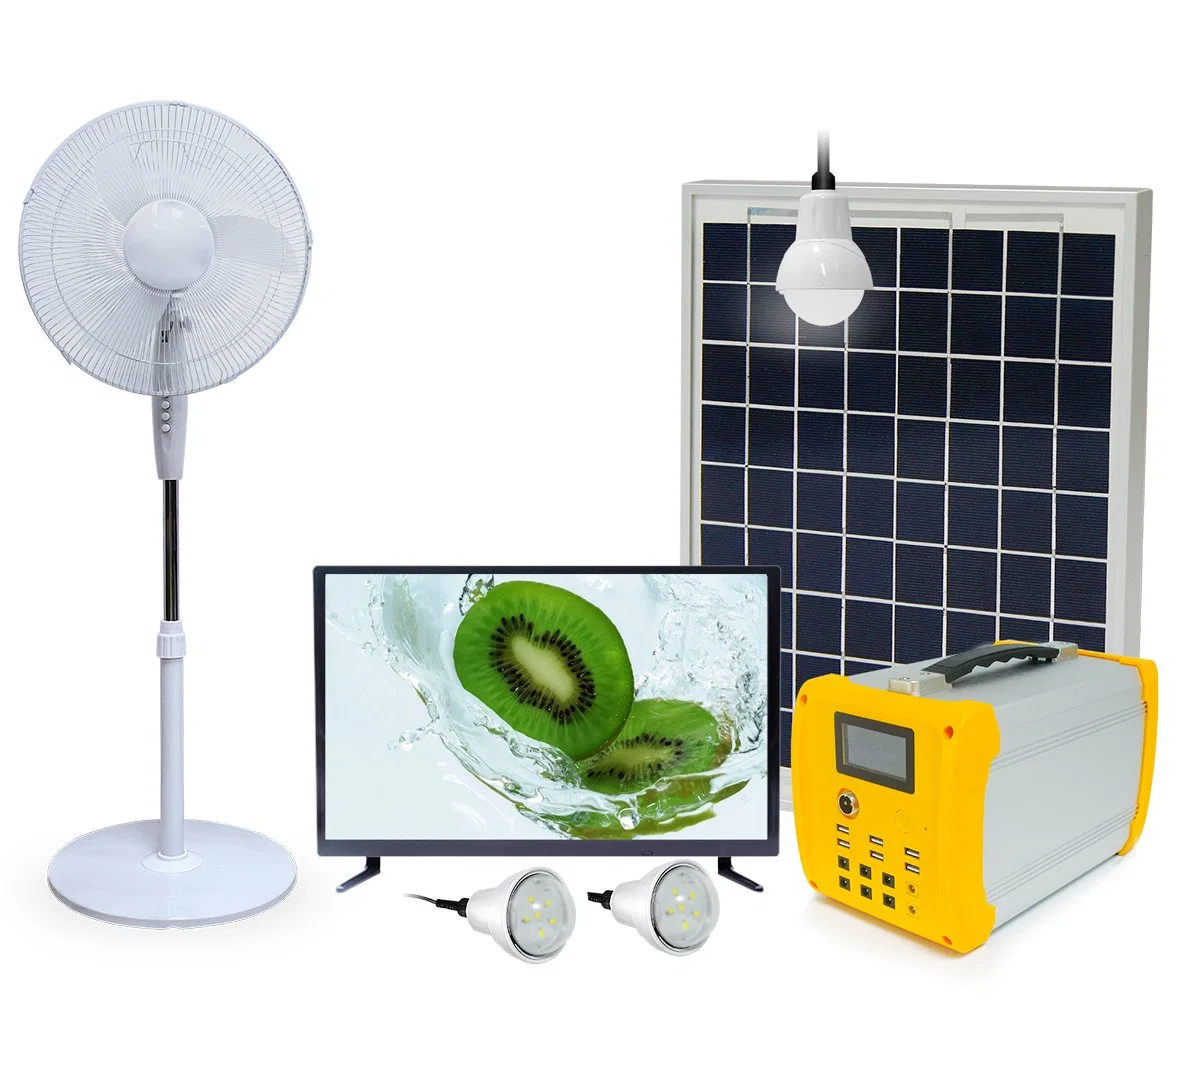 Tragbares Solarenergiesystem mit Solar-DC-TV-Solarventilator Und Handy-Ladegerät-Funktion